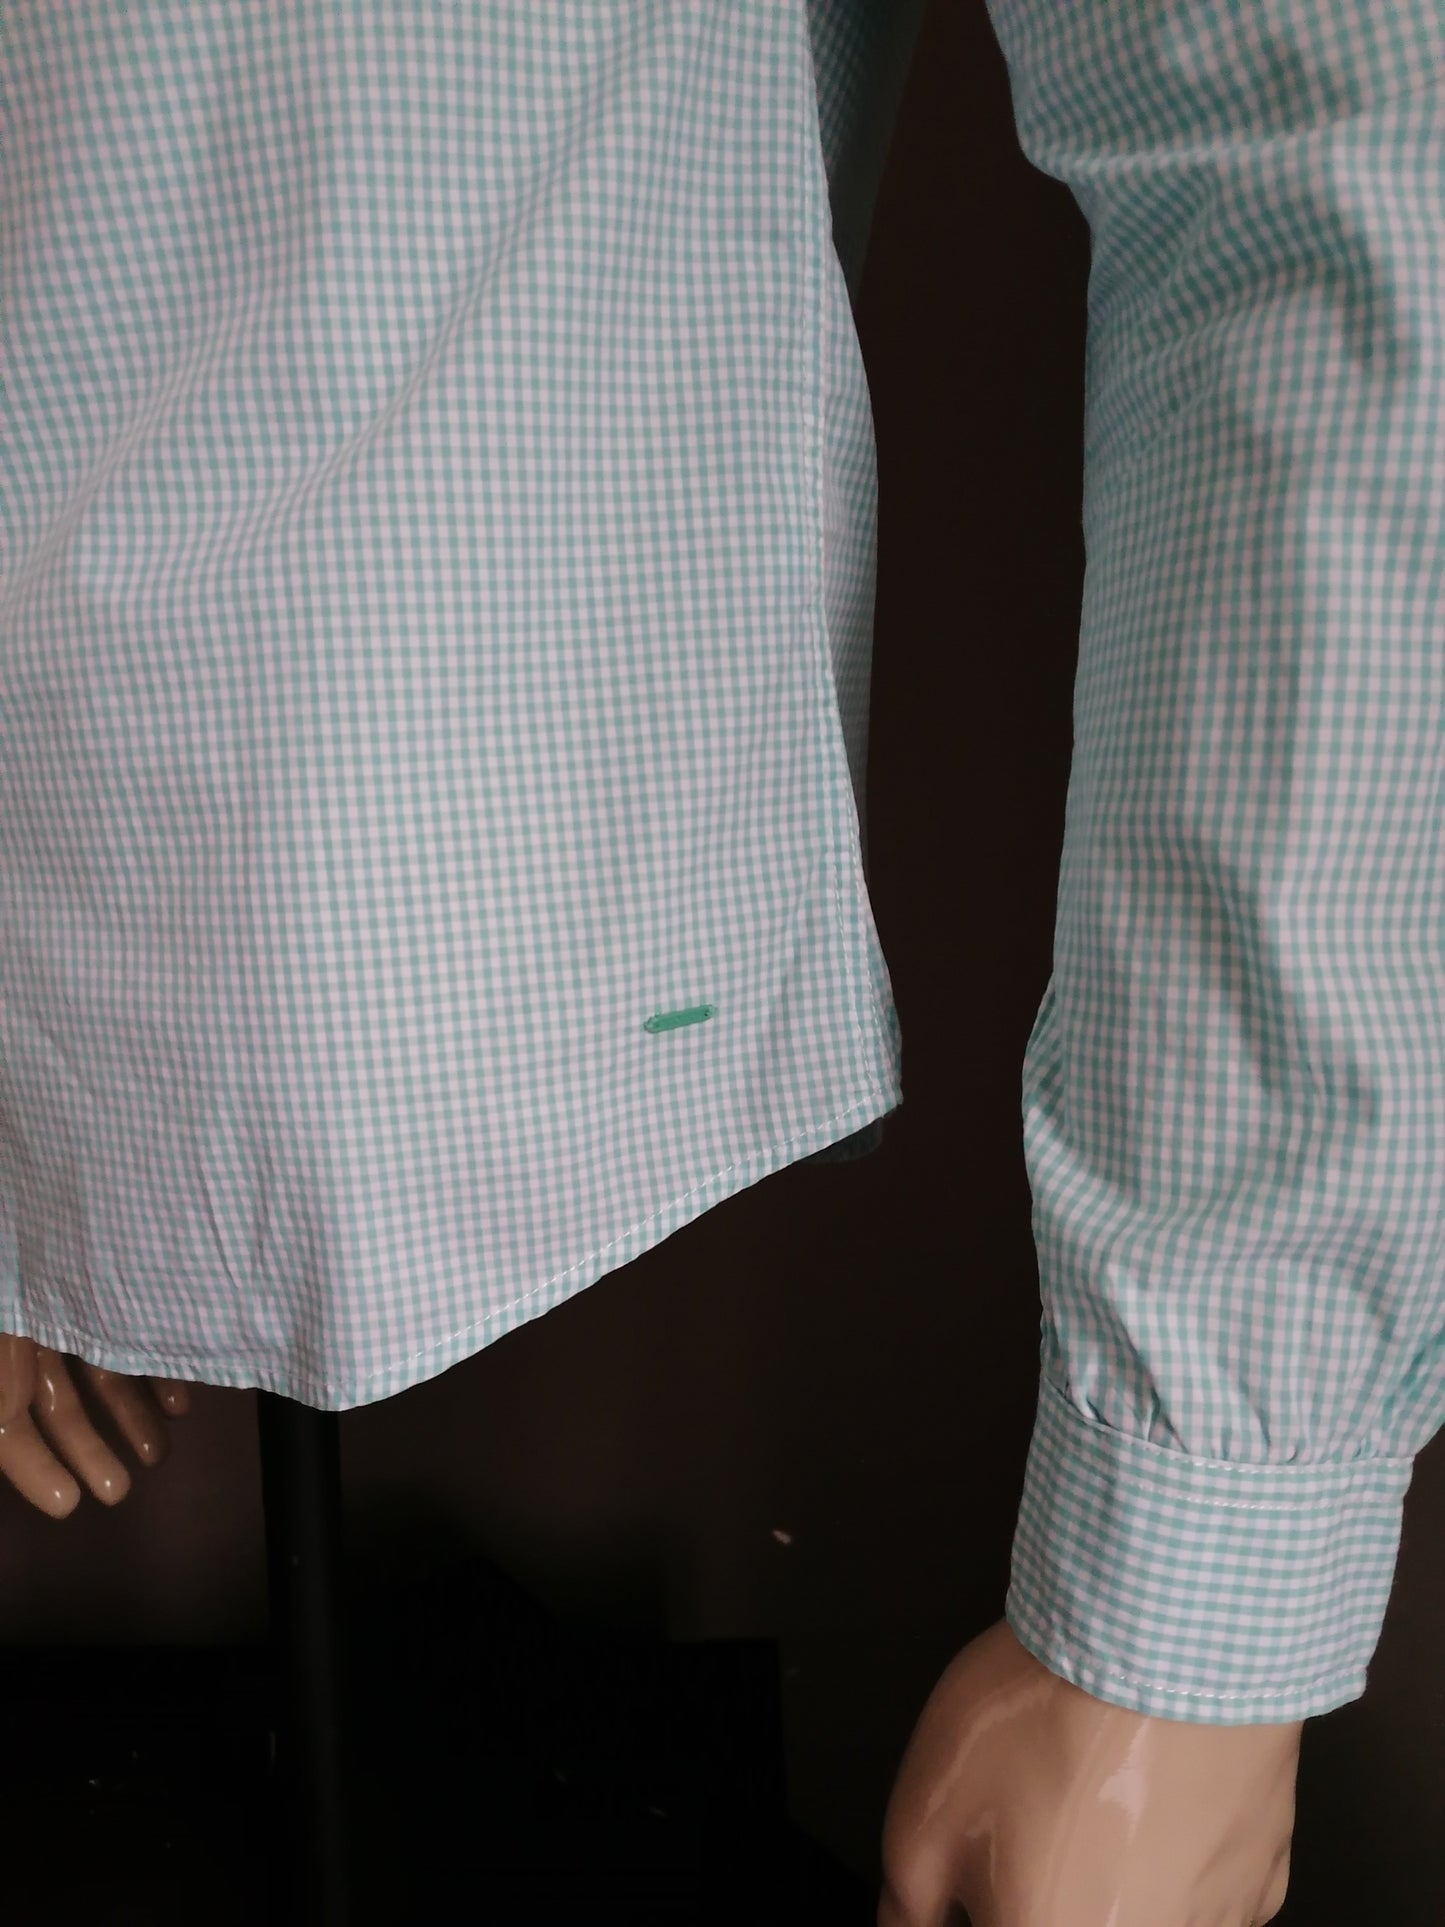 Scotch & Soda shirt. Green white checkered. Size S.